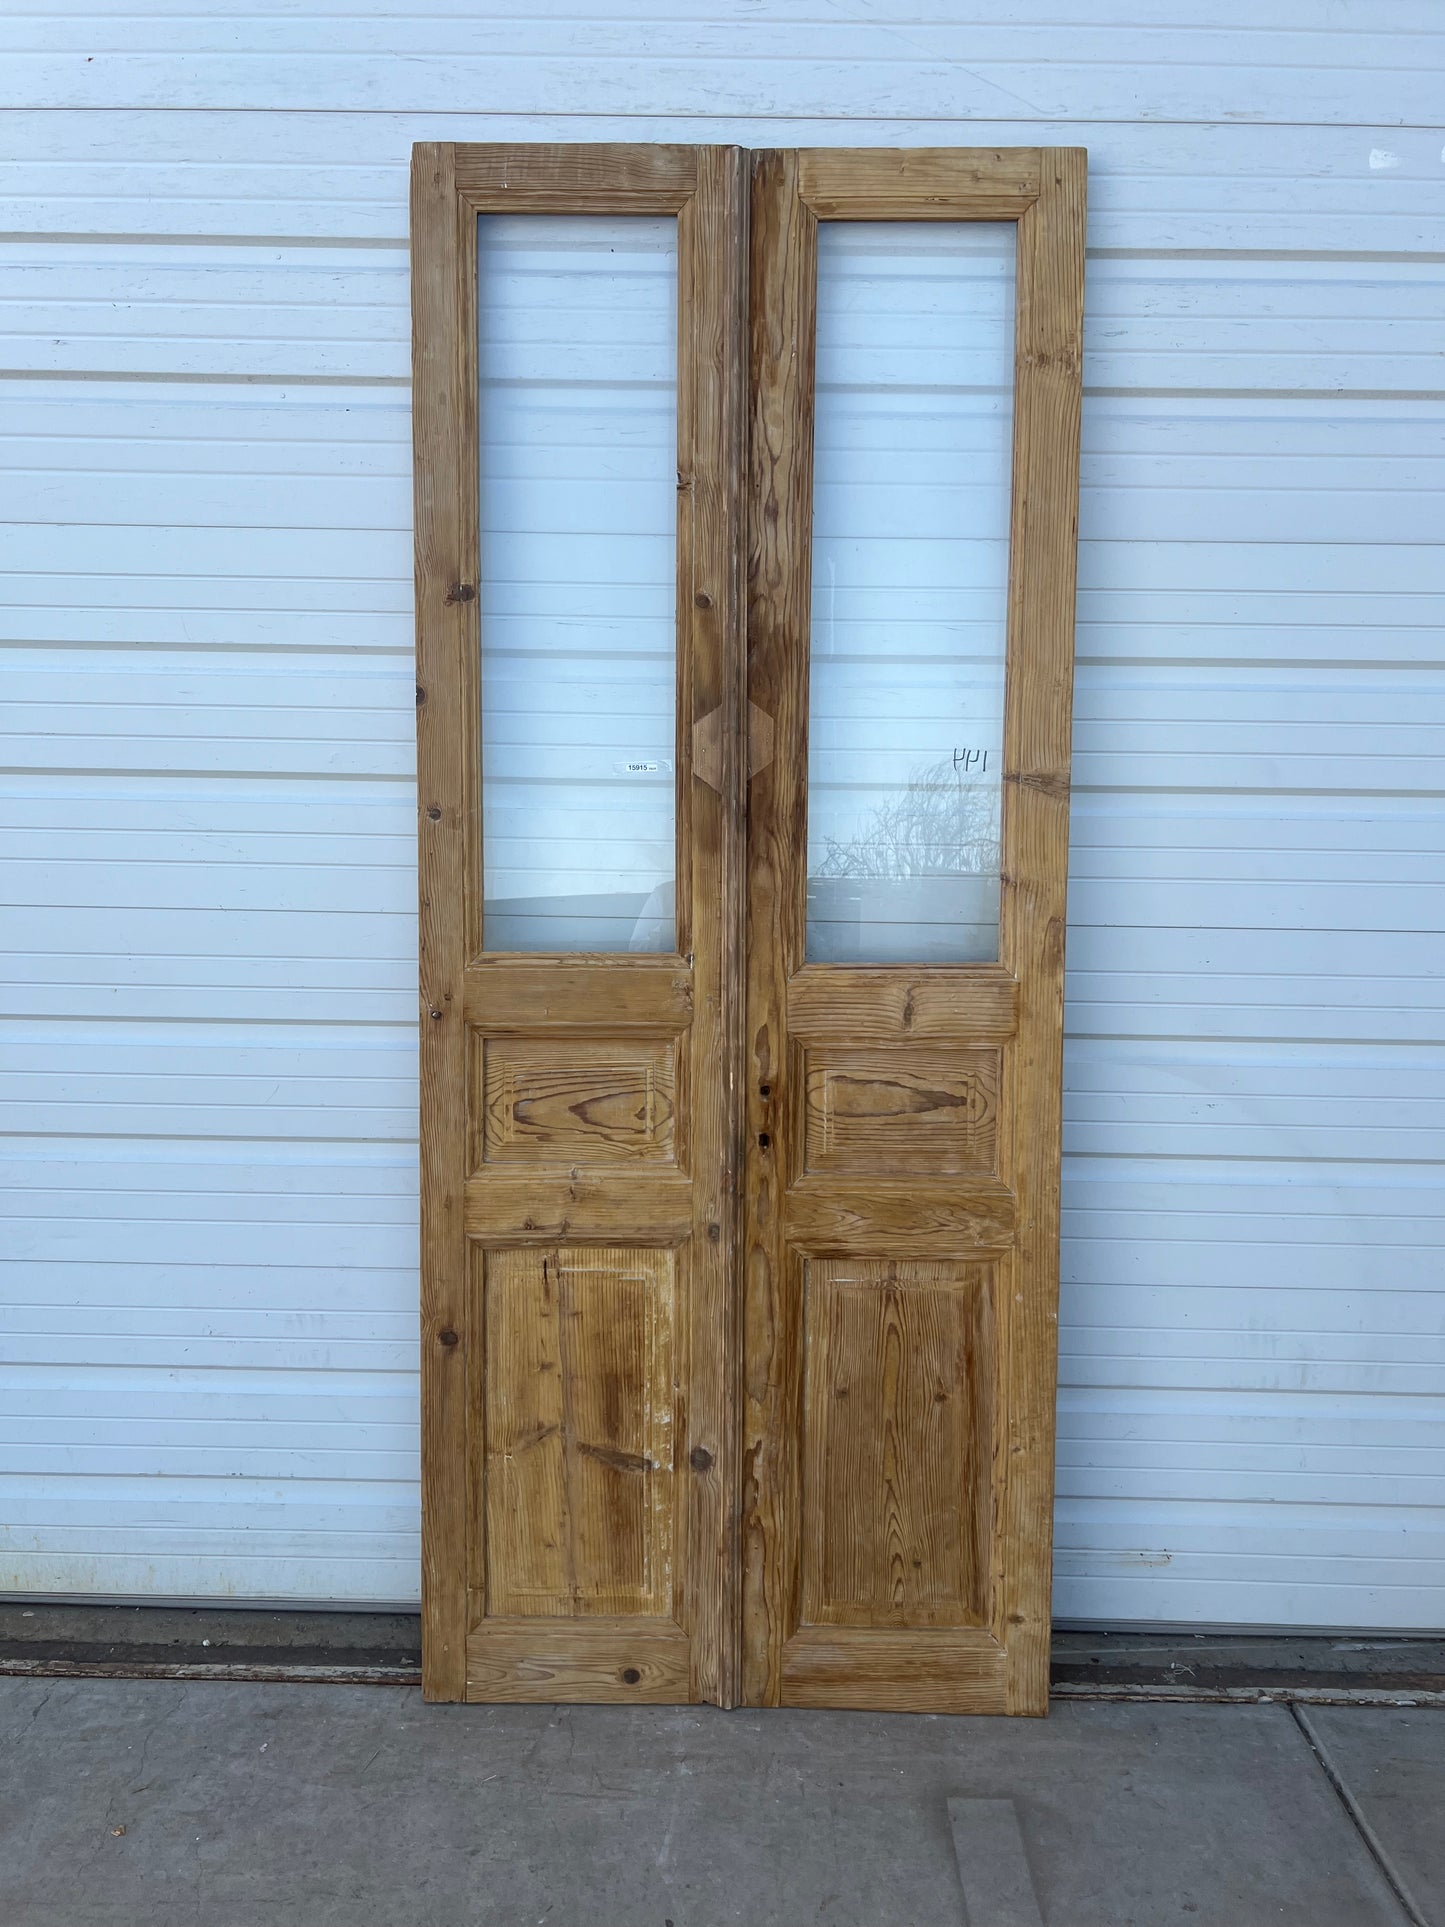 Pair of single Lite Wood French Doors